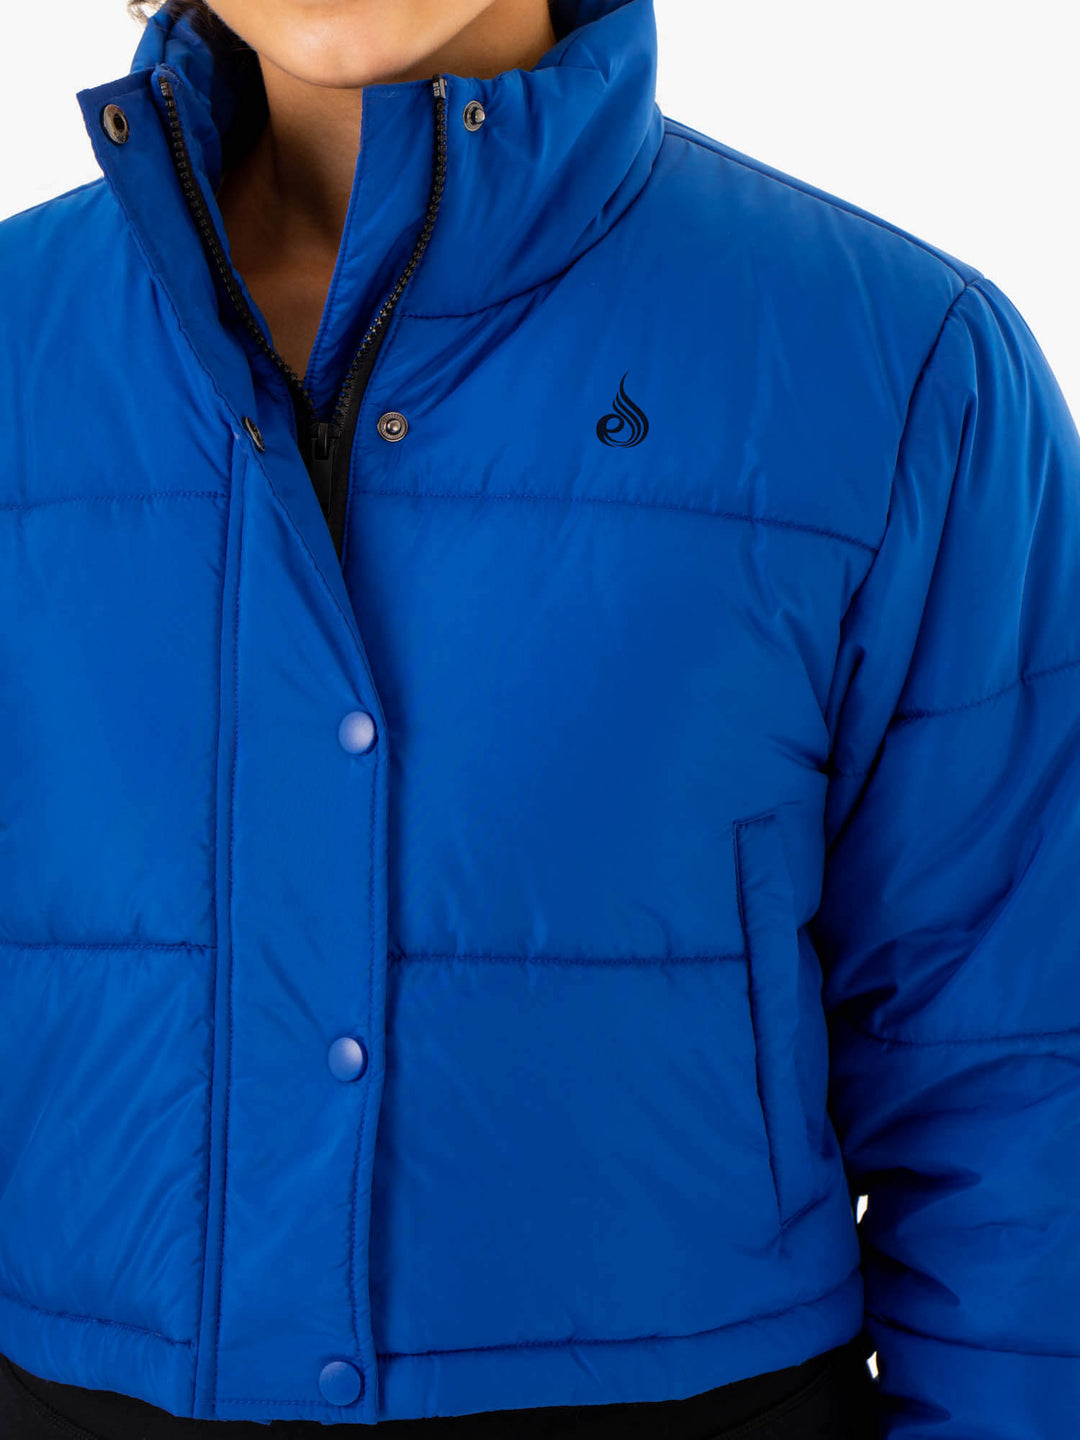 Apex Puffer Jacket - Cobalt Blue Clothing Ryderwear 